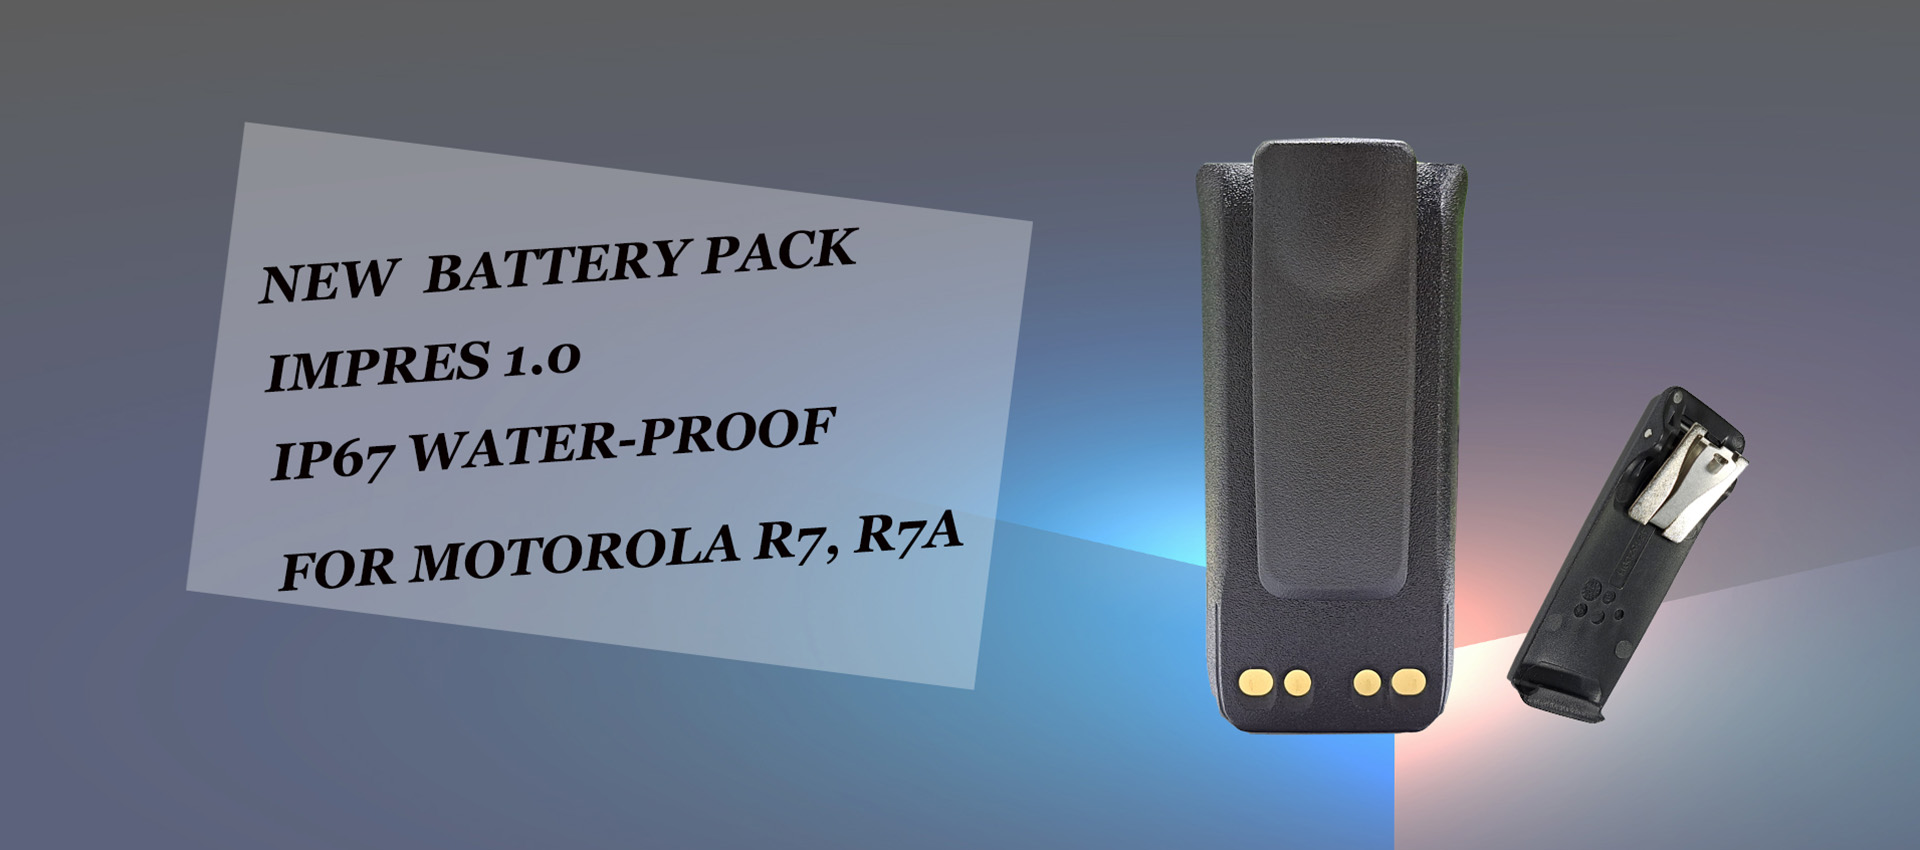 Updated Battery for Motorola R7 series radios